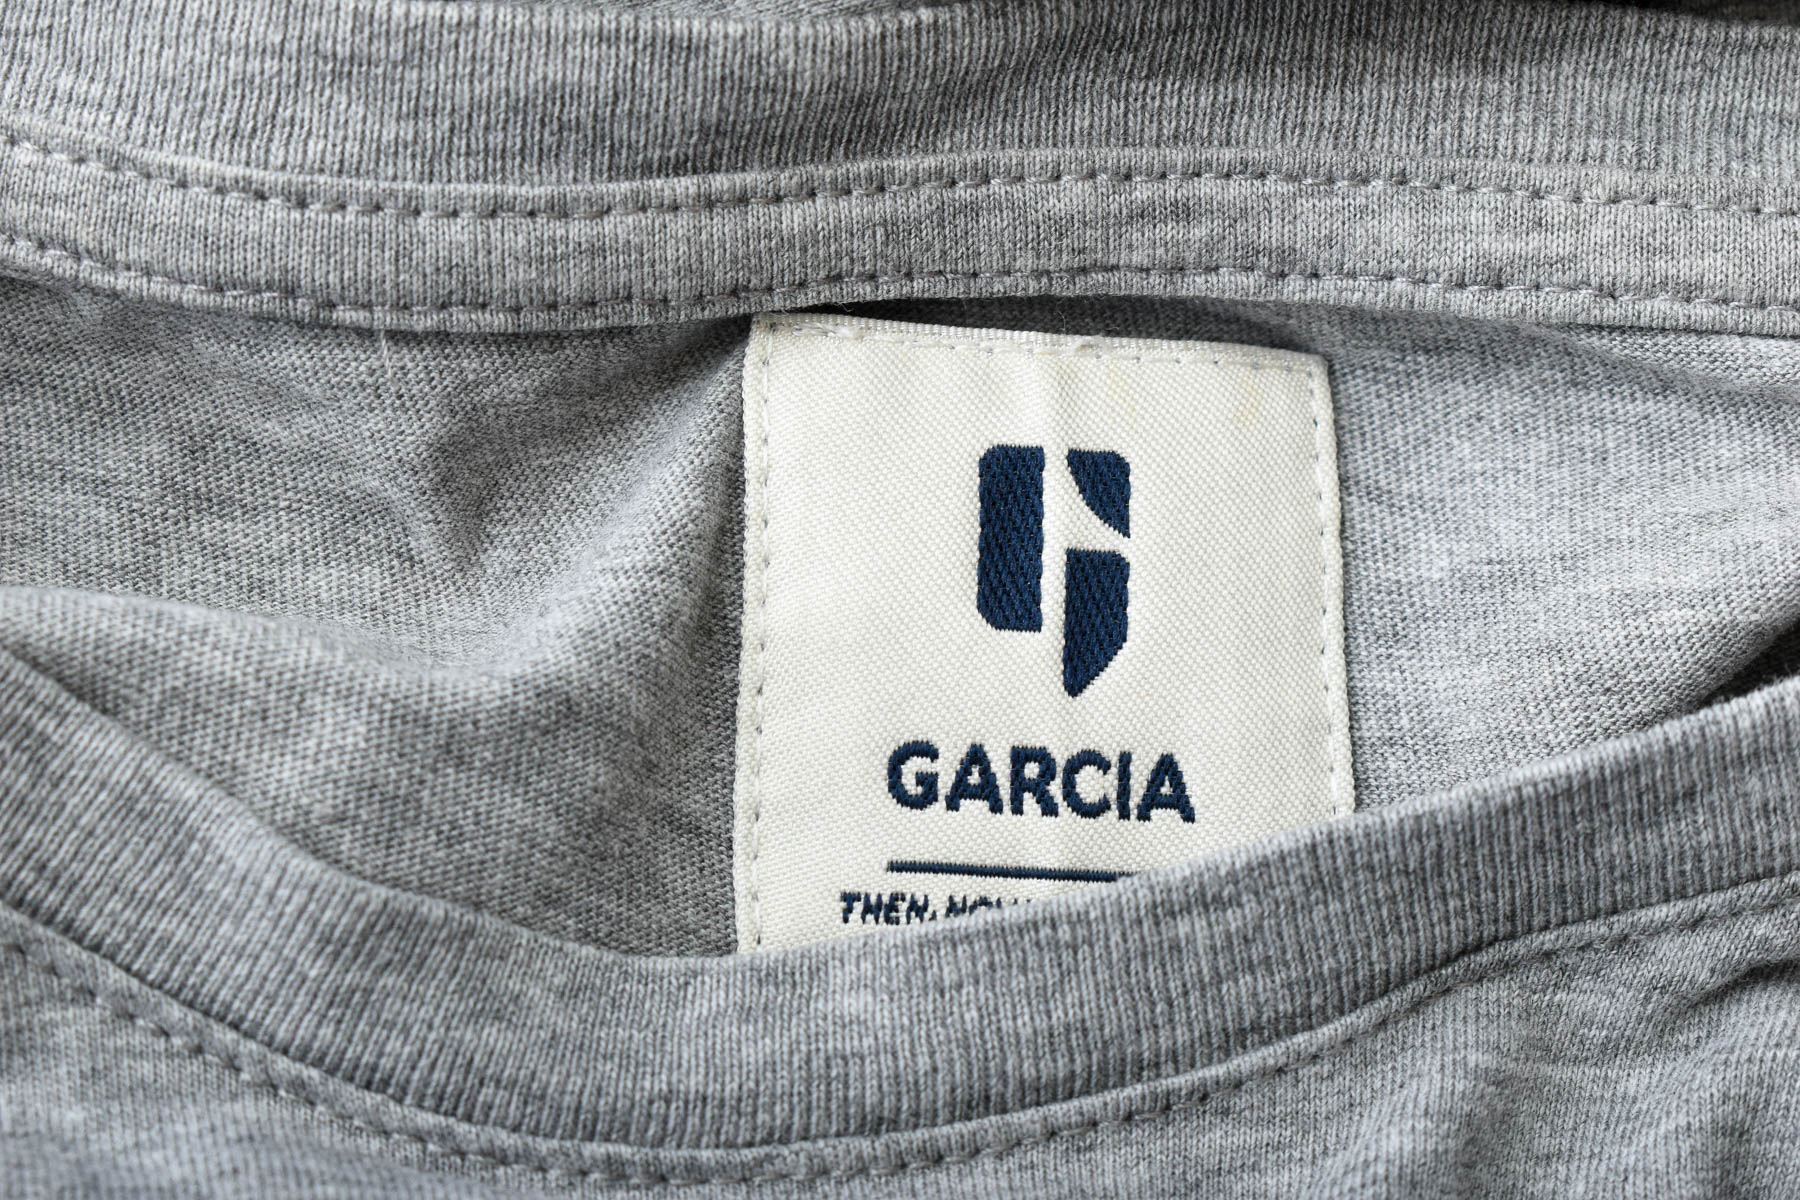 Boys' blouse - Garcia - 2